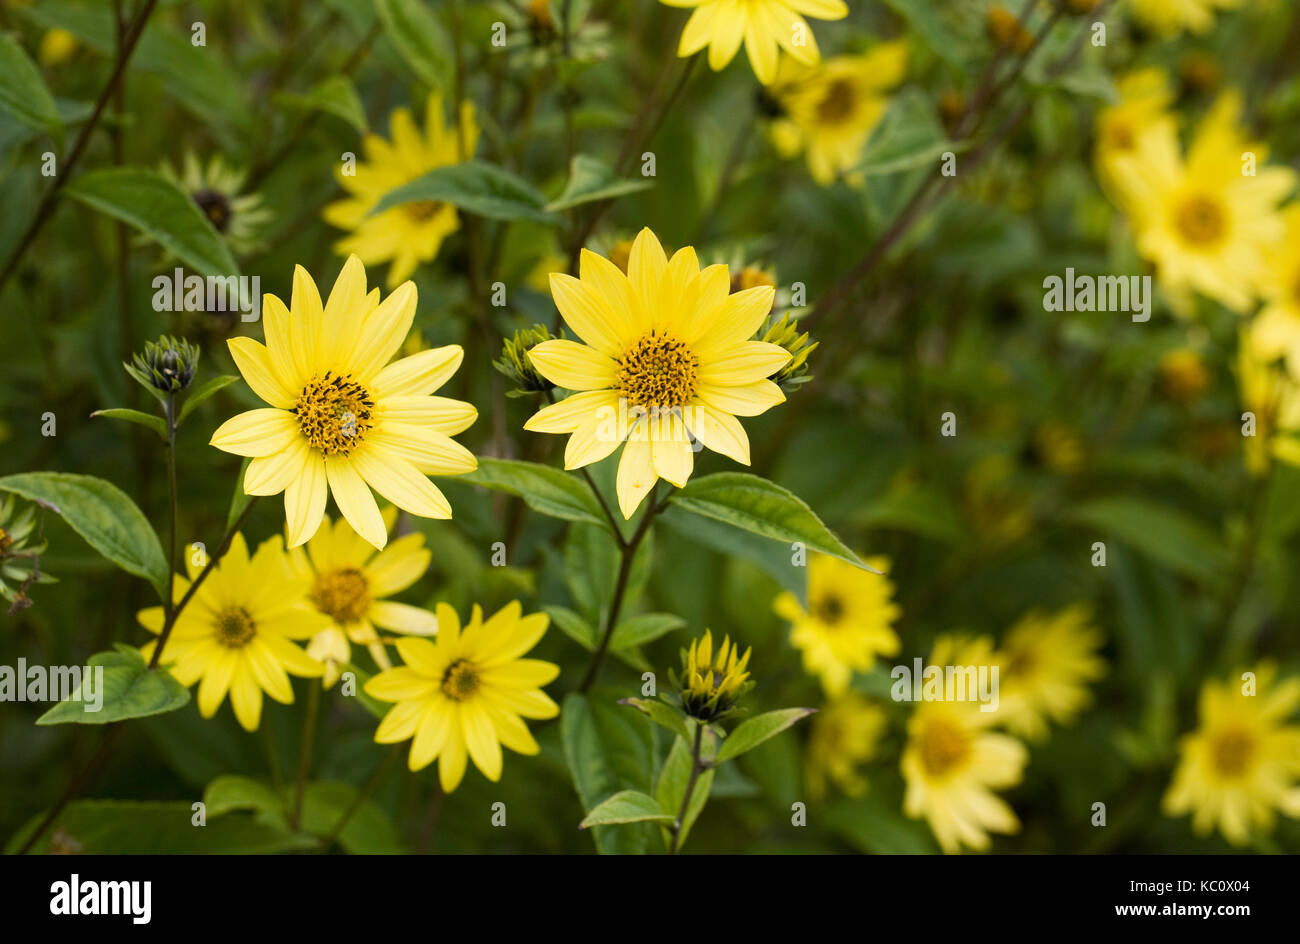 Helianthus 'Lemon Queen' flowers. Perennial sunflowers. Stock Photo